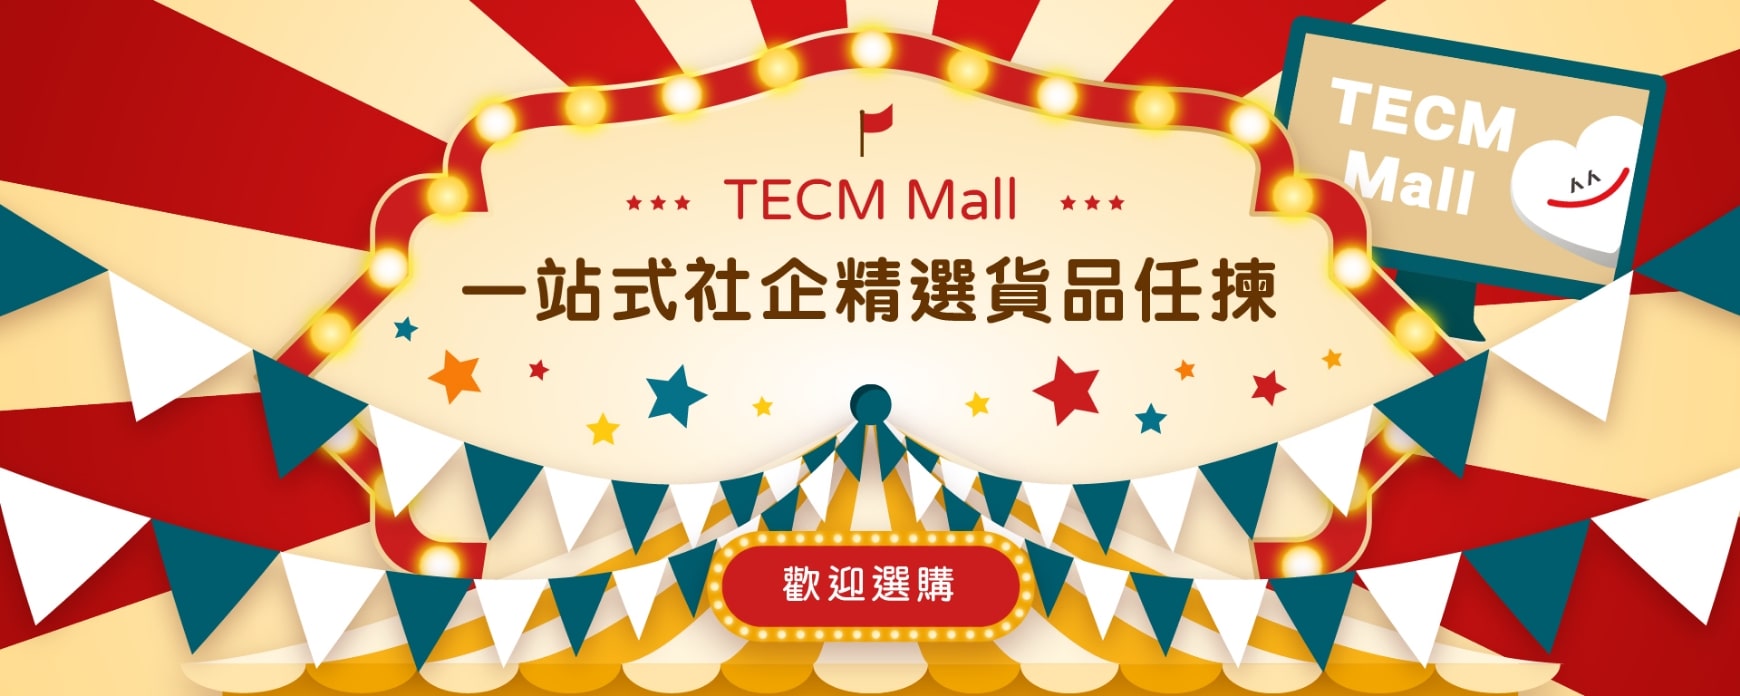 TECM Mall 一站式社企精选货品